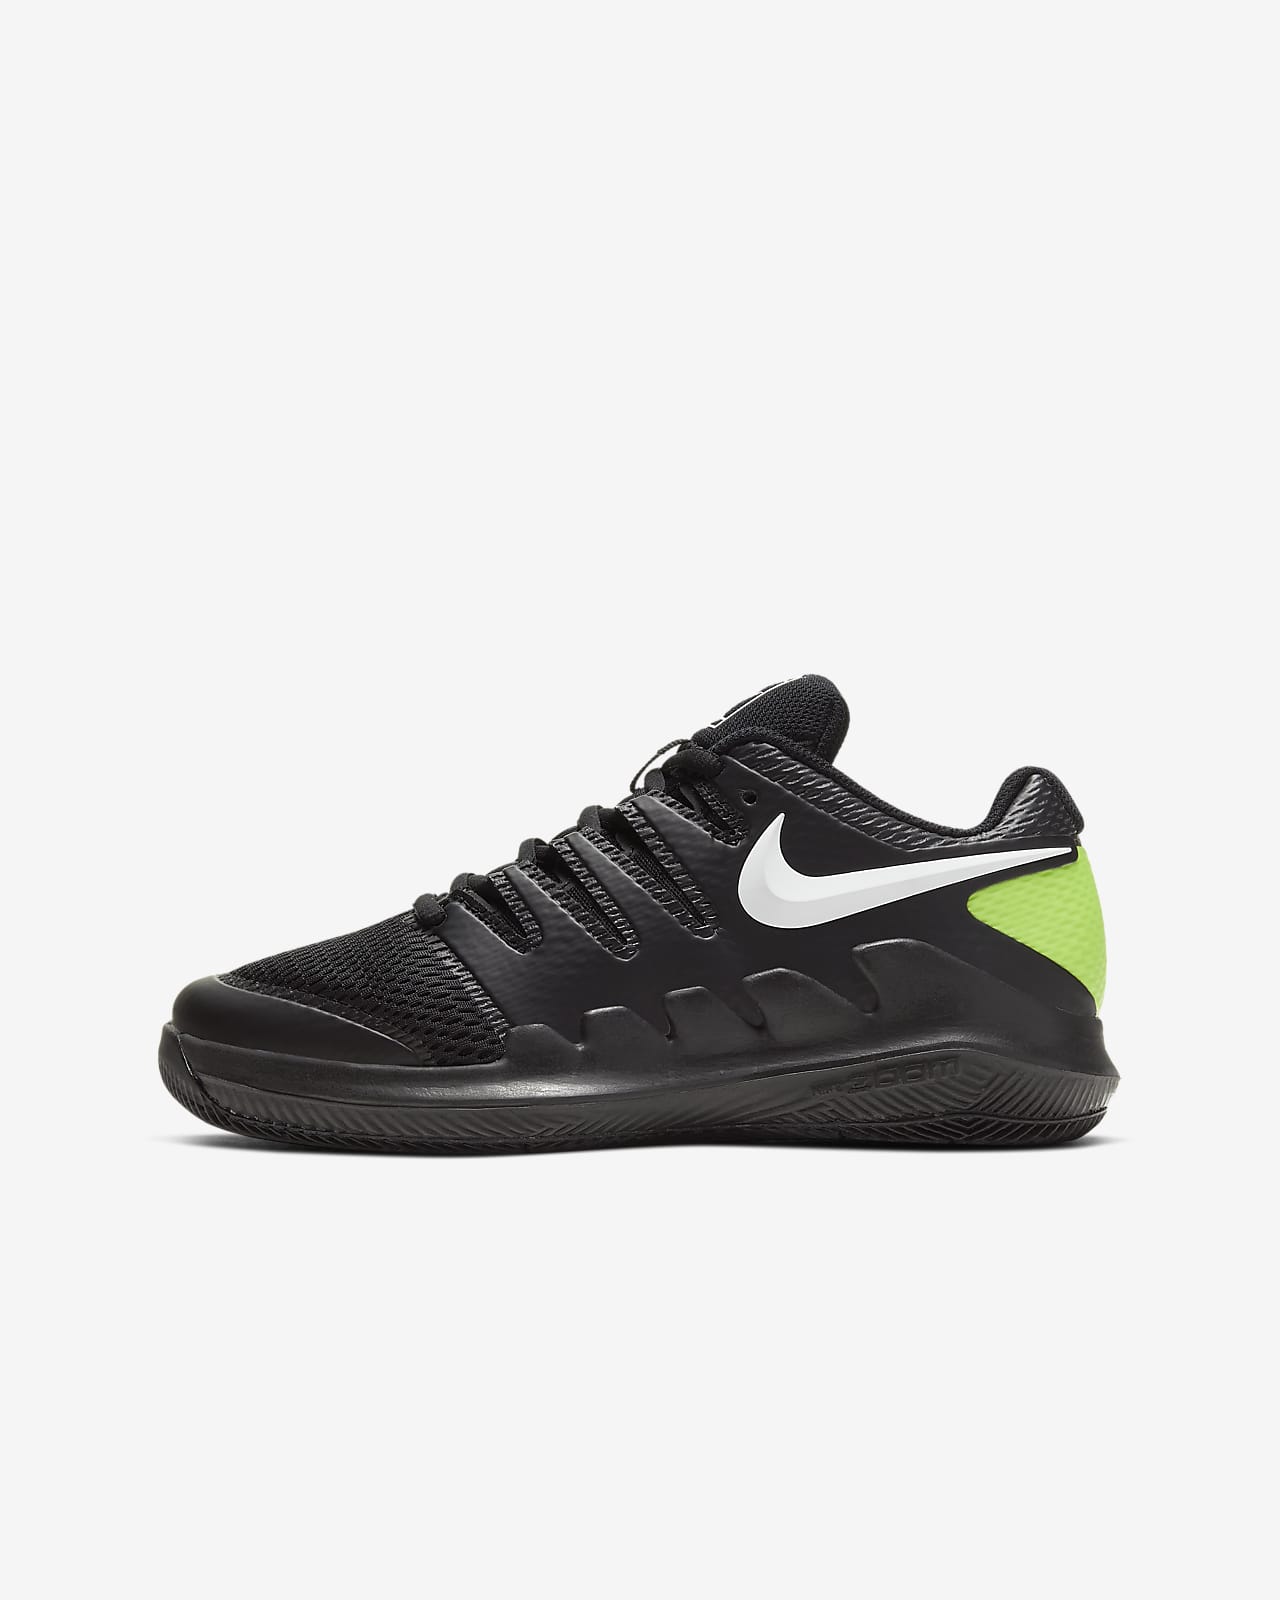 kids black tennis shoes